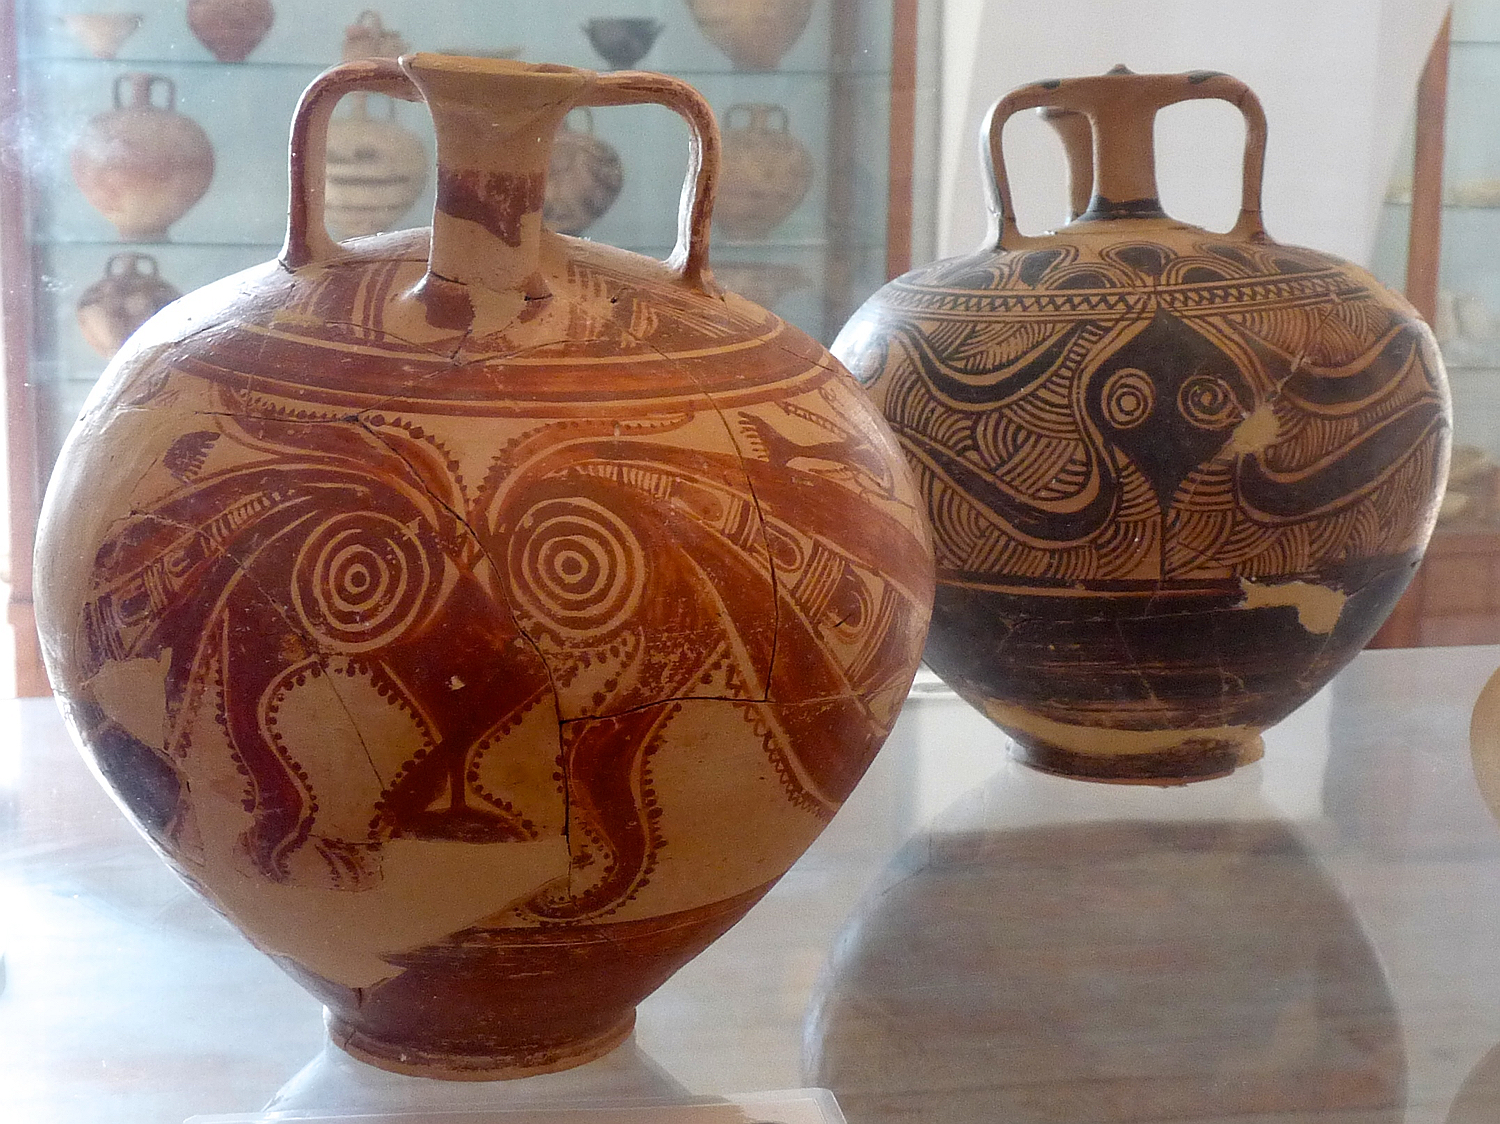 Mycenaean marine style vases, Naxos